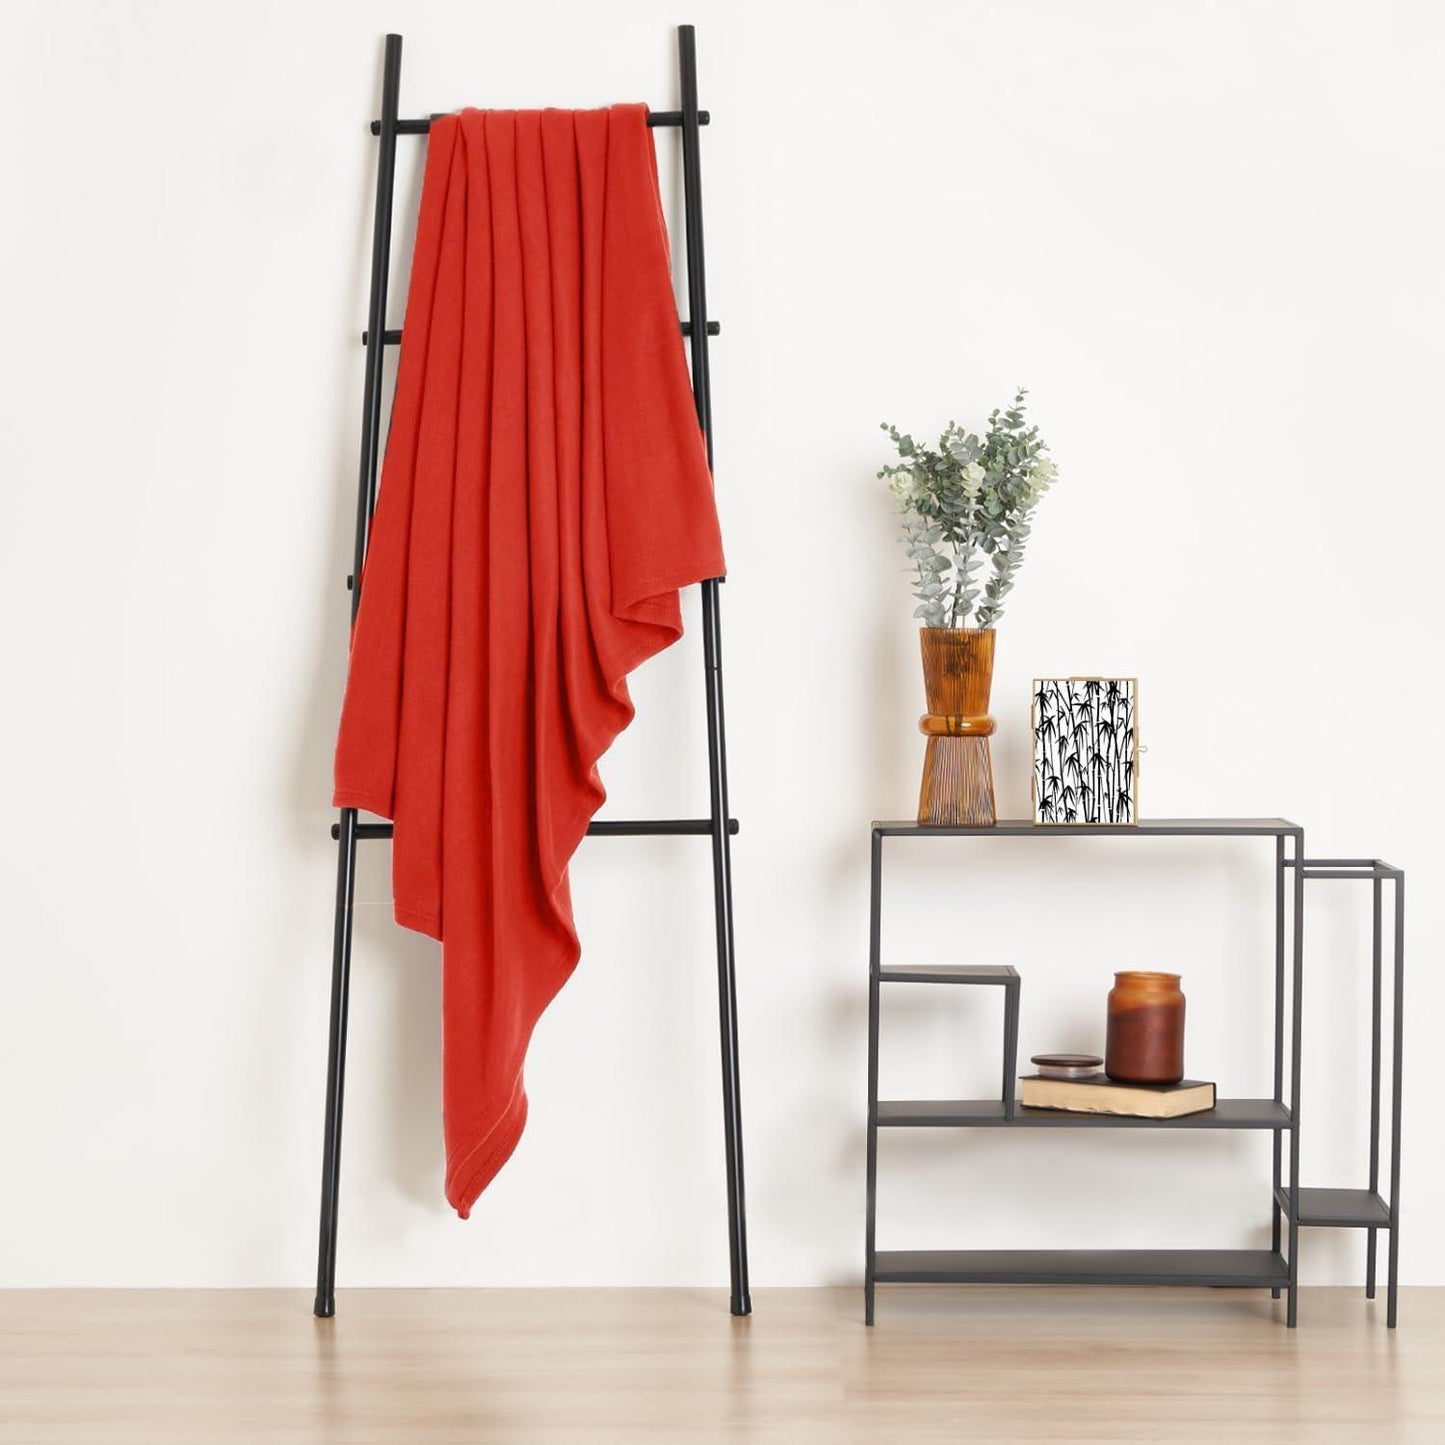 Soft Red Throw Blanket Warm Polar Fleece Blanket Bed Plush for Travel Sofa Adult Kids Twin Throw Blanket Red Cheap 50 x60 Outdoor Throw Blanket for All Season - Loomini